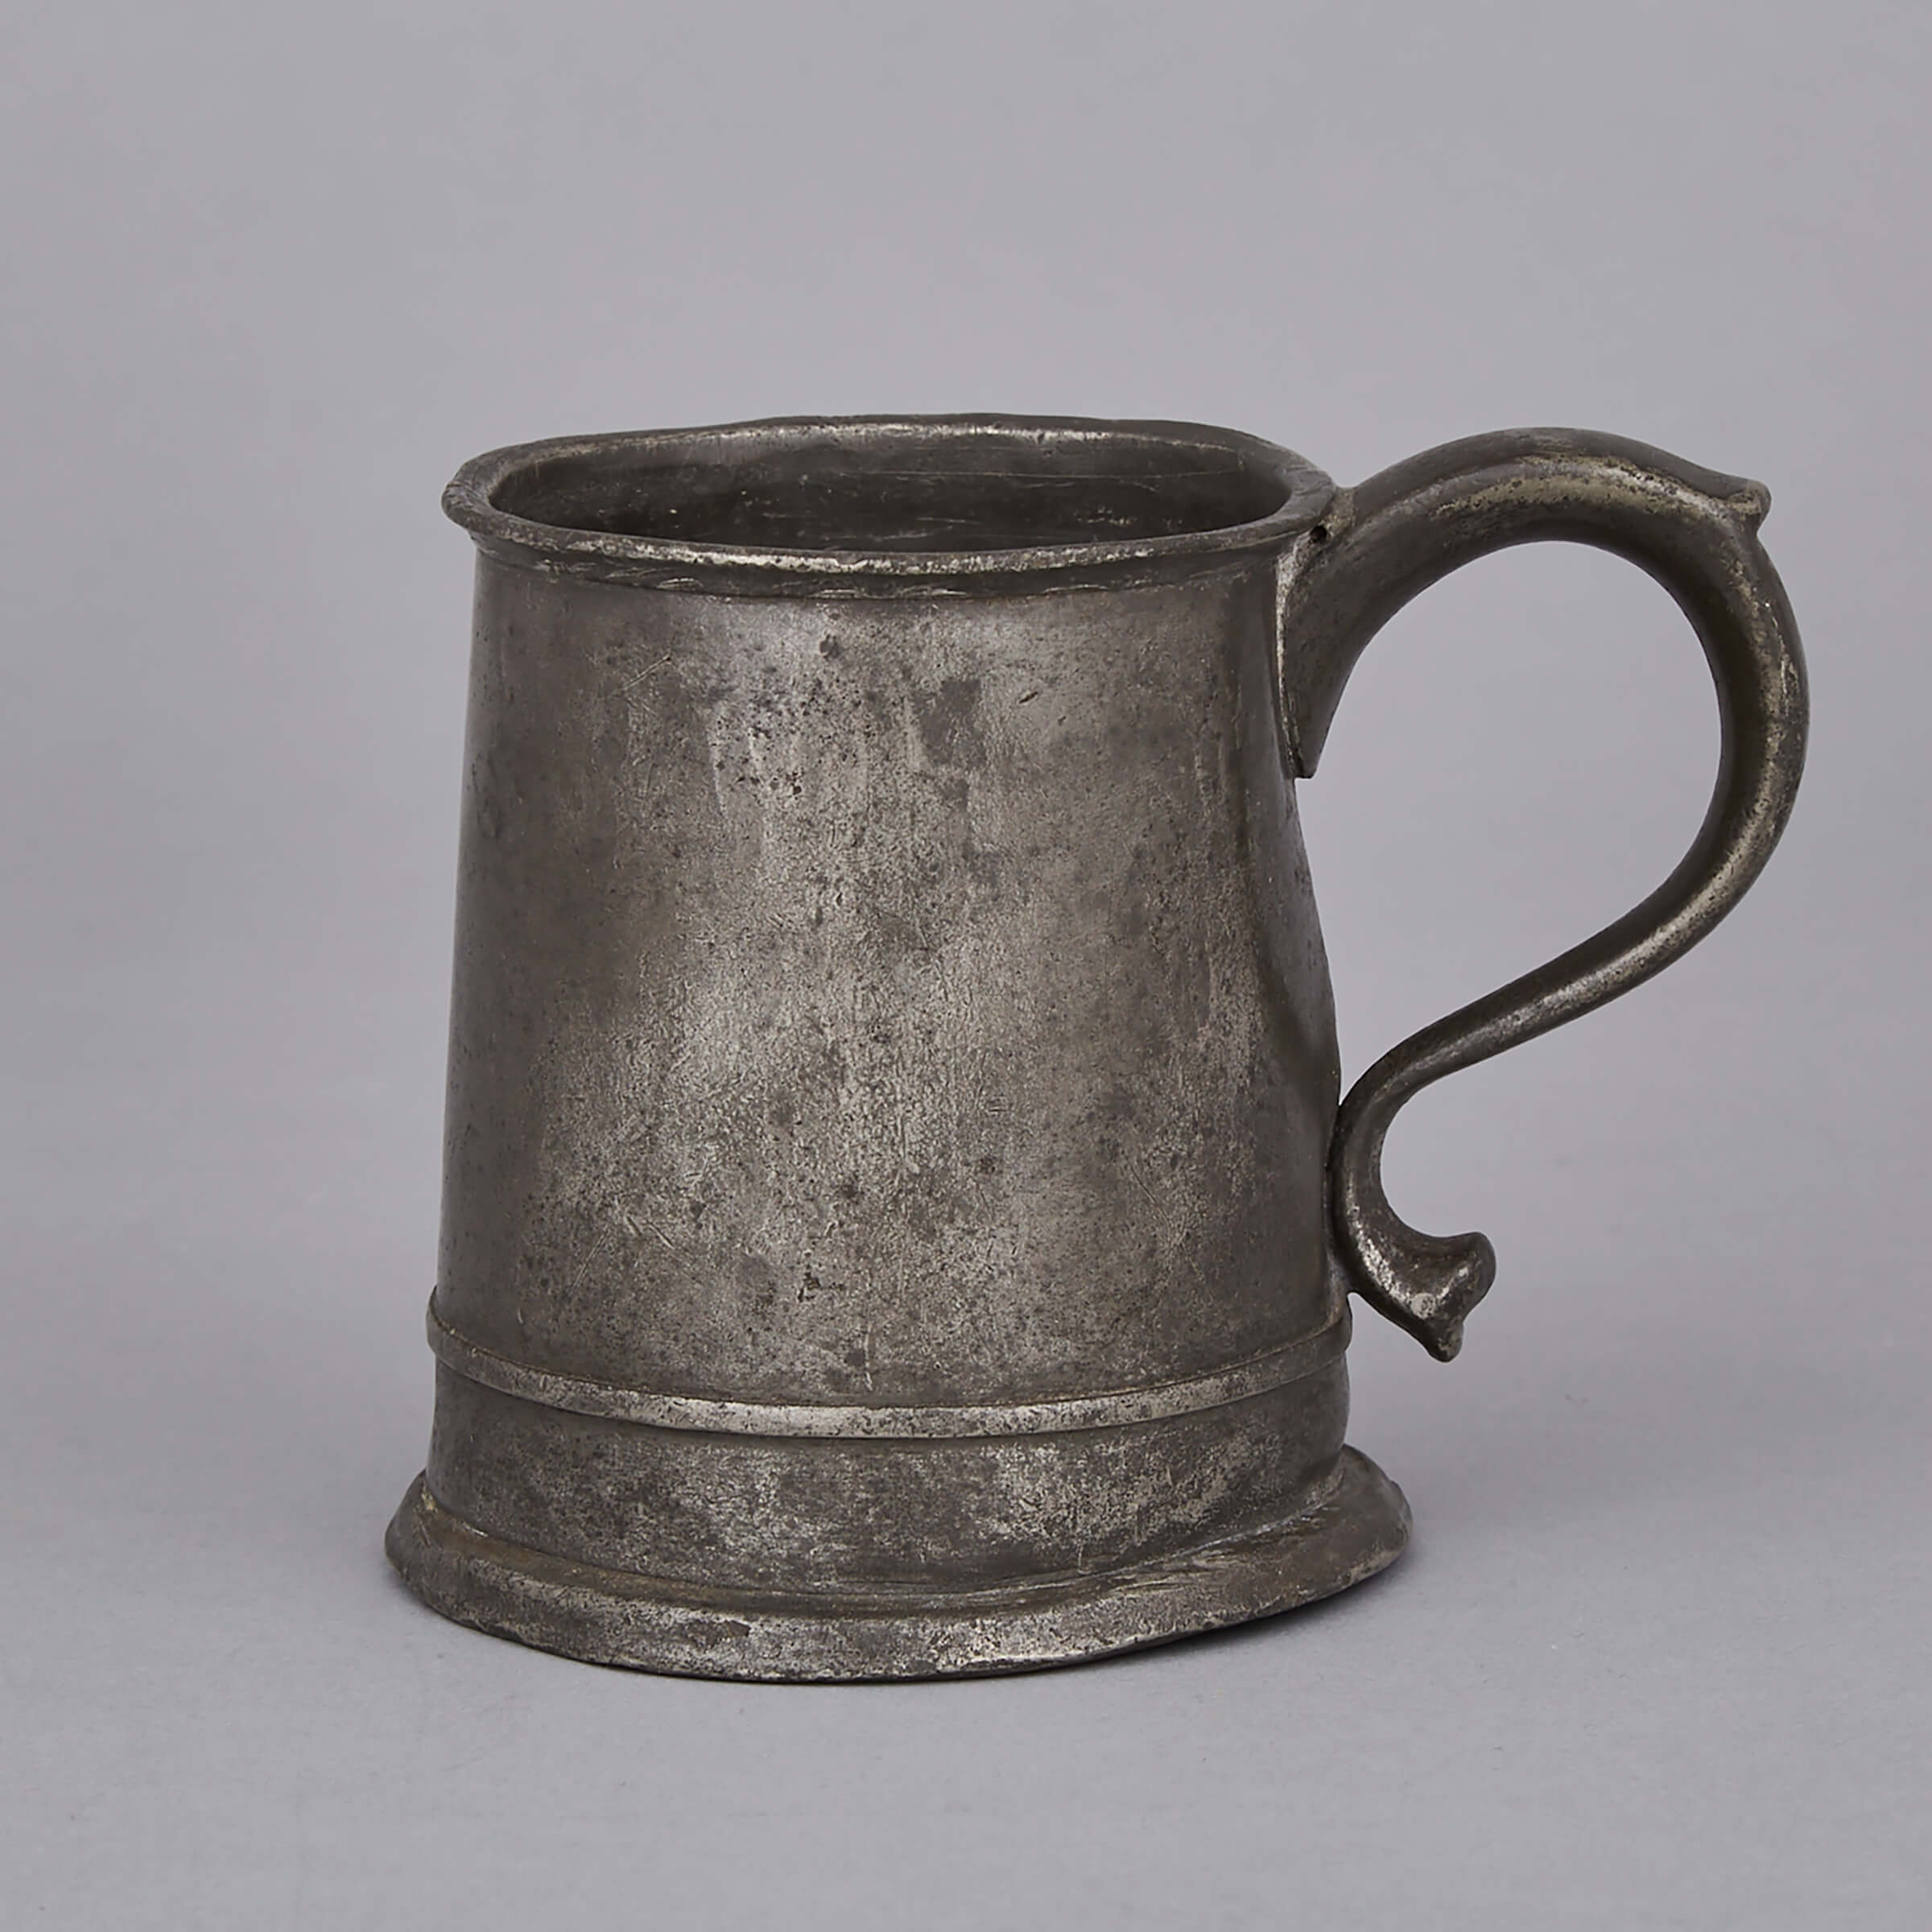 Scottish Pewter Mutchkin Mug, William Scott III, Edinburgh, late 18th/early 19th century